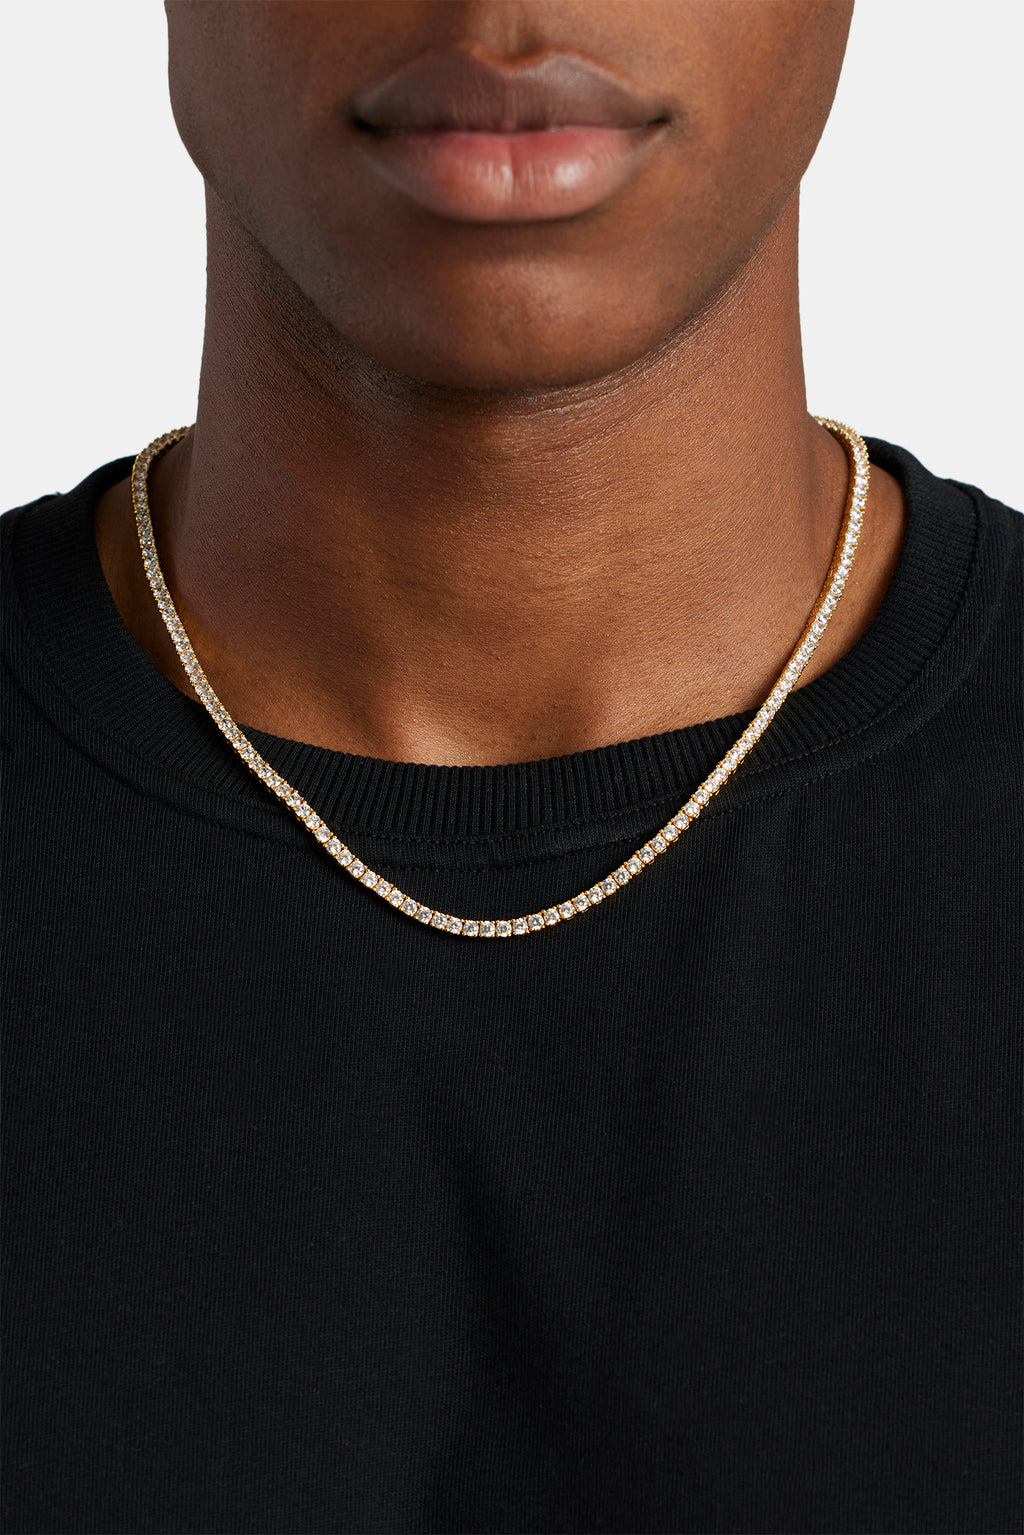 Huge 28 Ct Men's Natural Diamond Tennis Necklace 14K White Gold 22